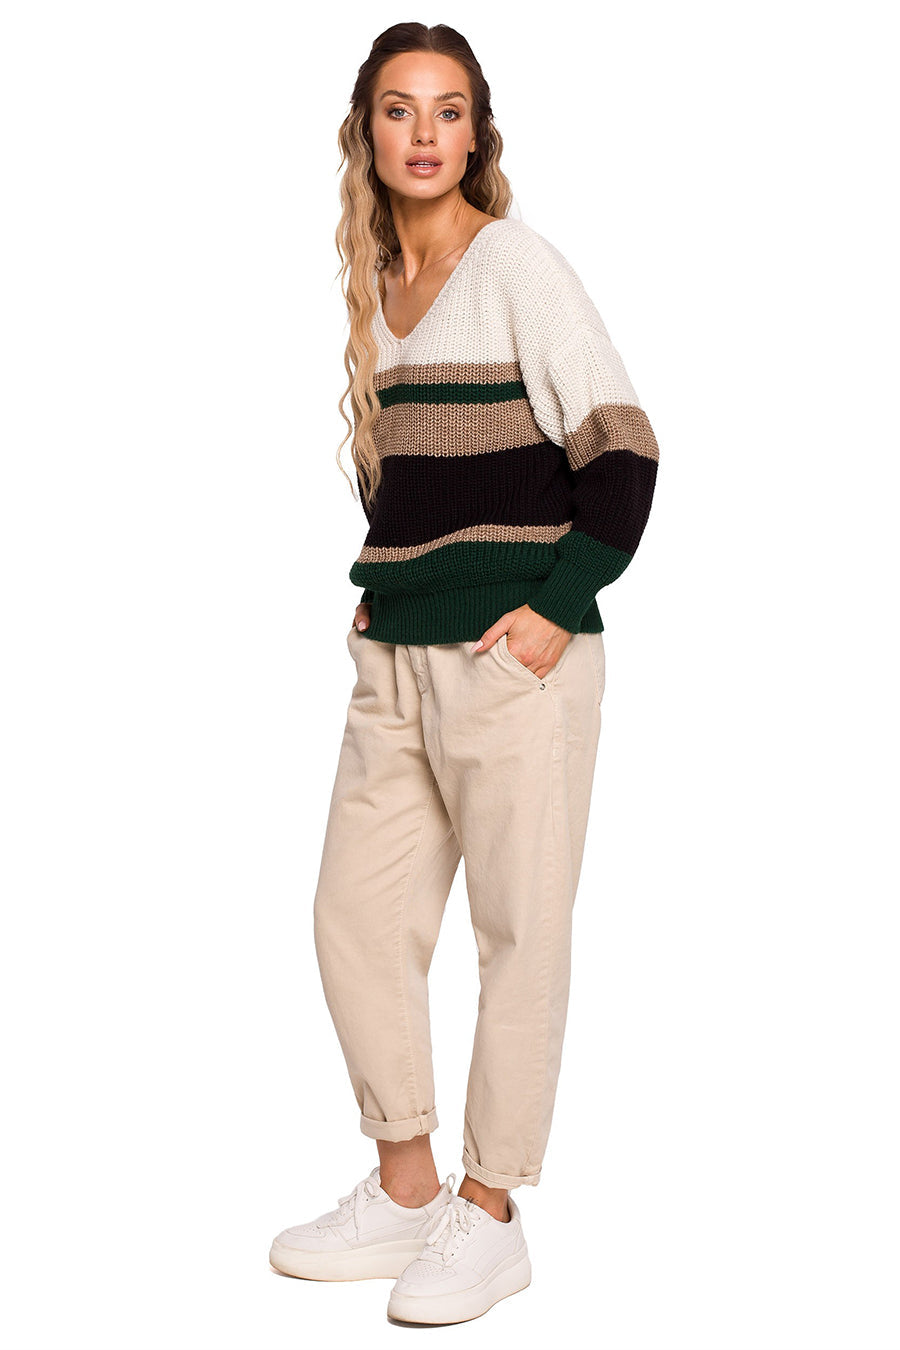 Дамски пуловер Aithne, Бял/Зелен 2